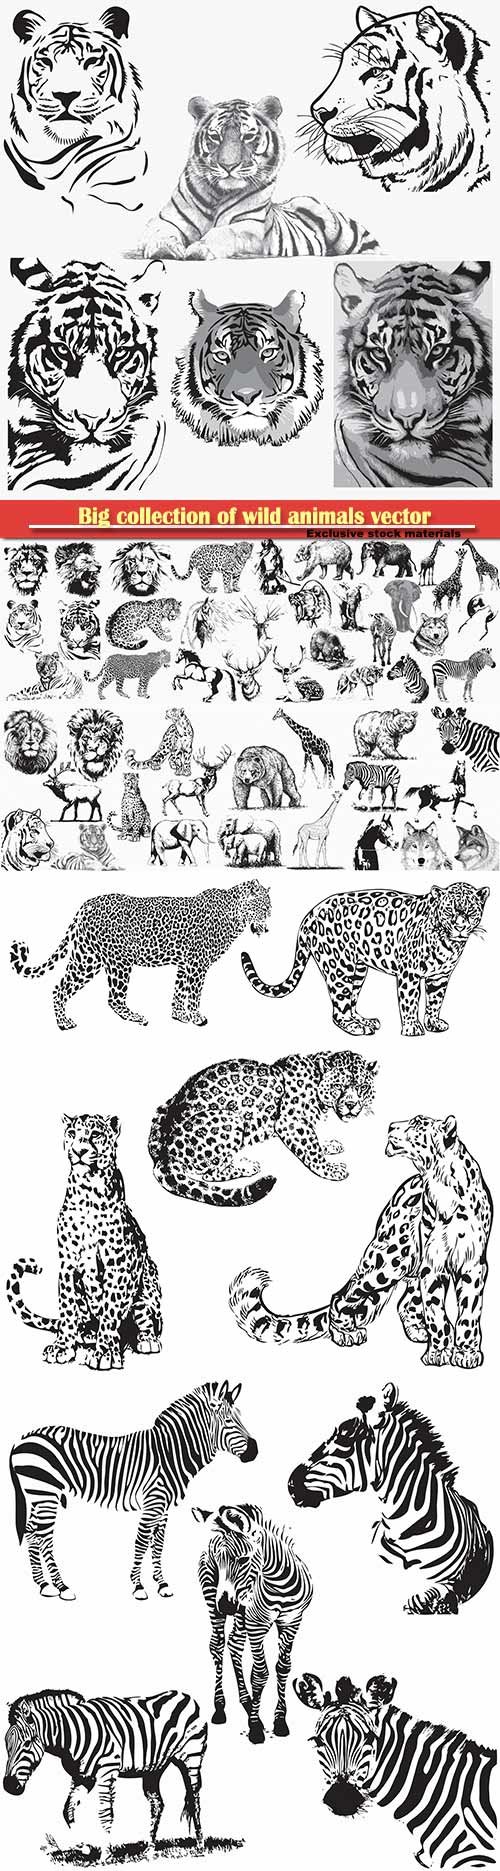 Big collection of wild animals vector illustration